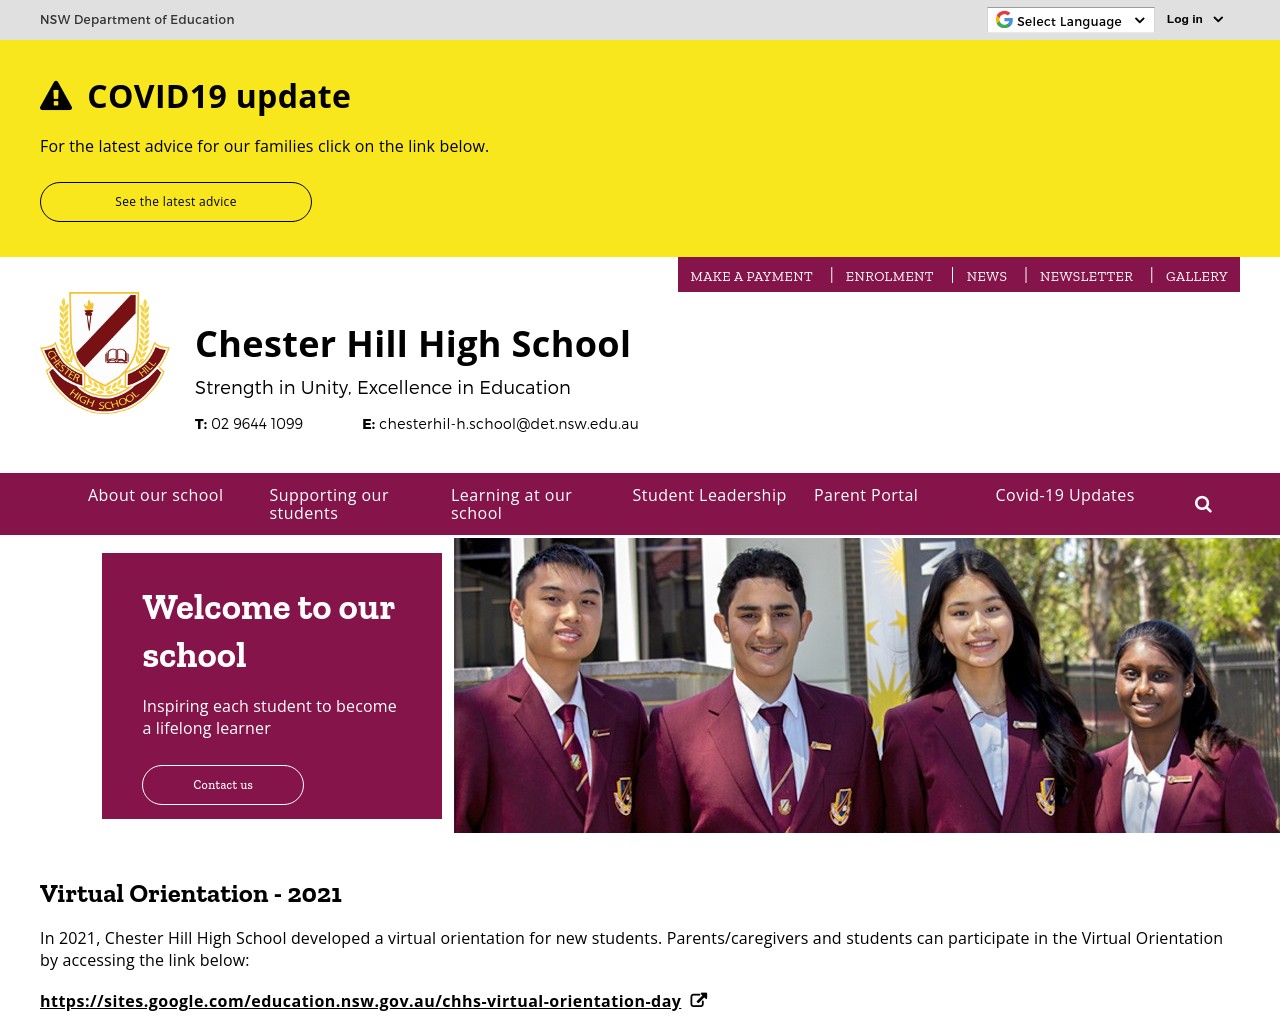 Chester Hill High School